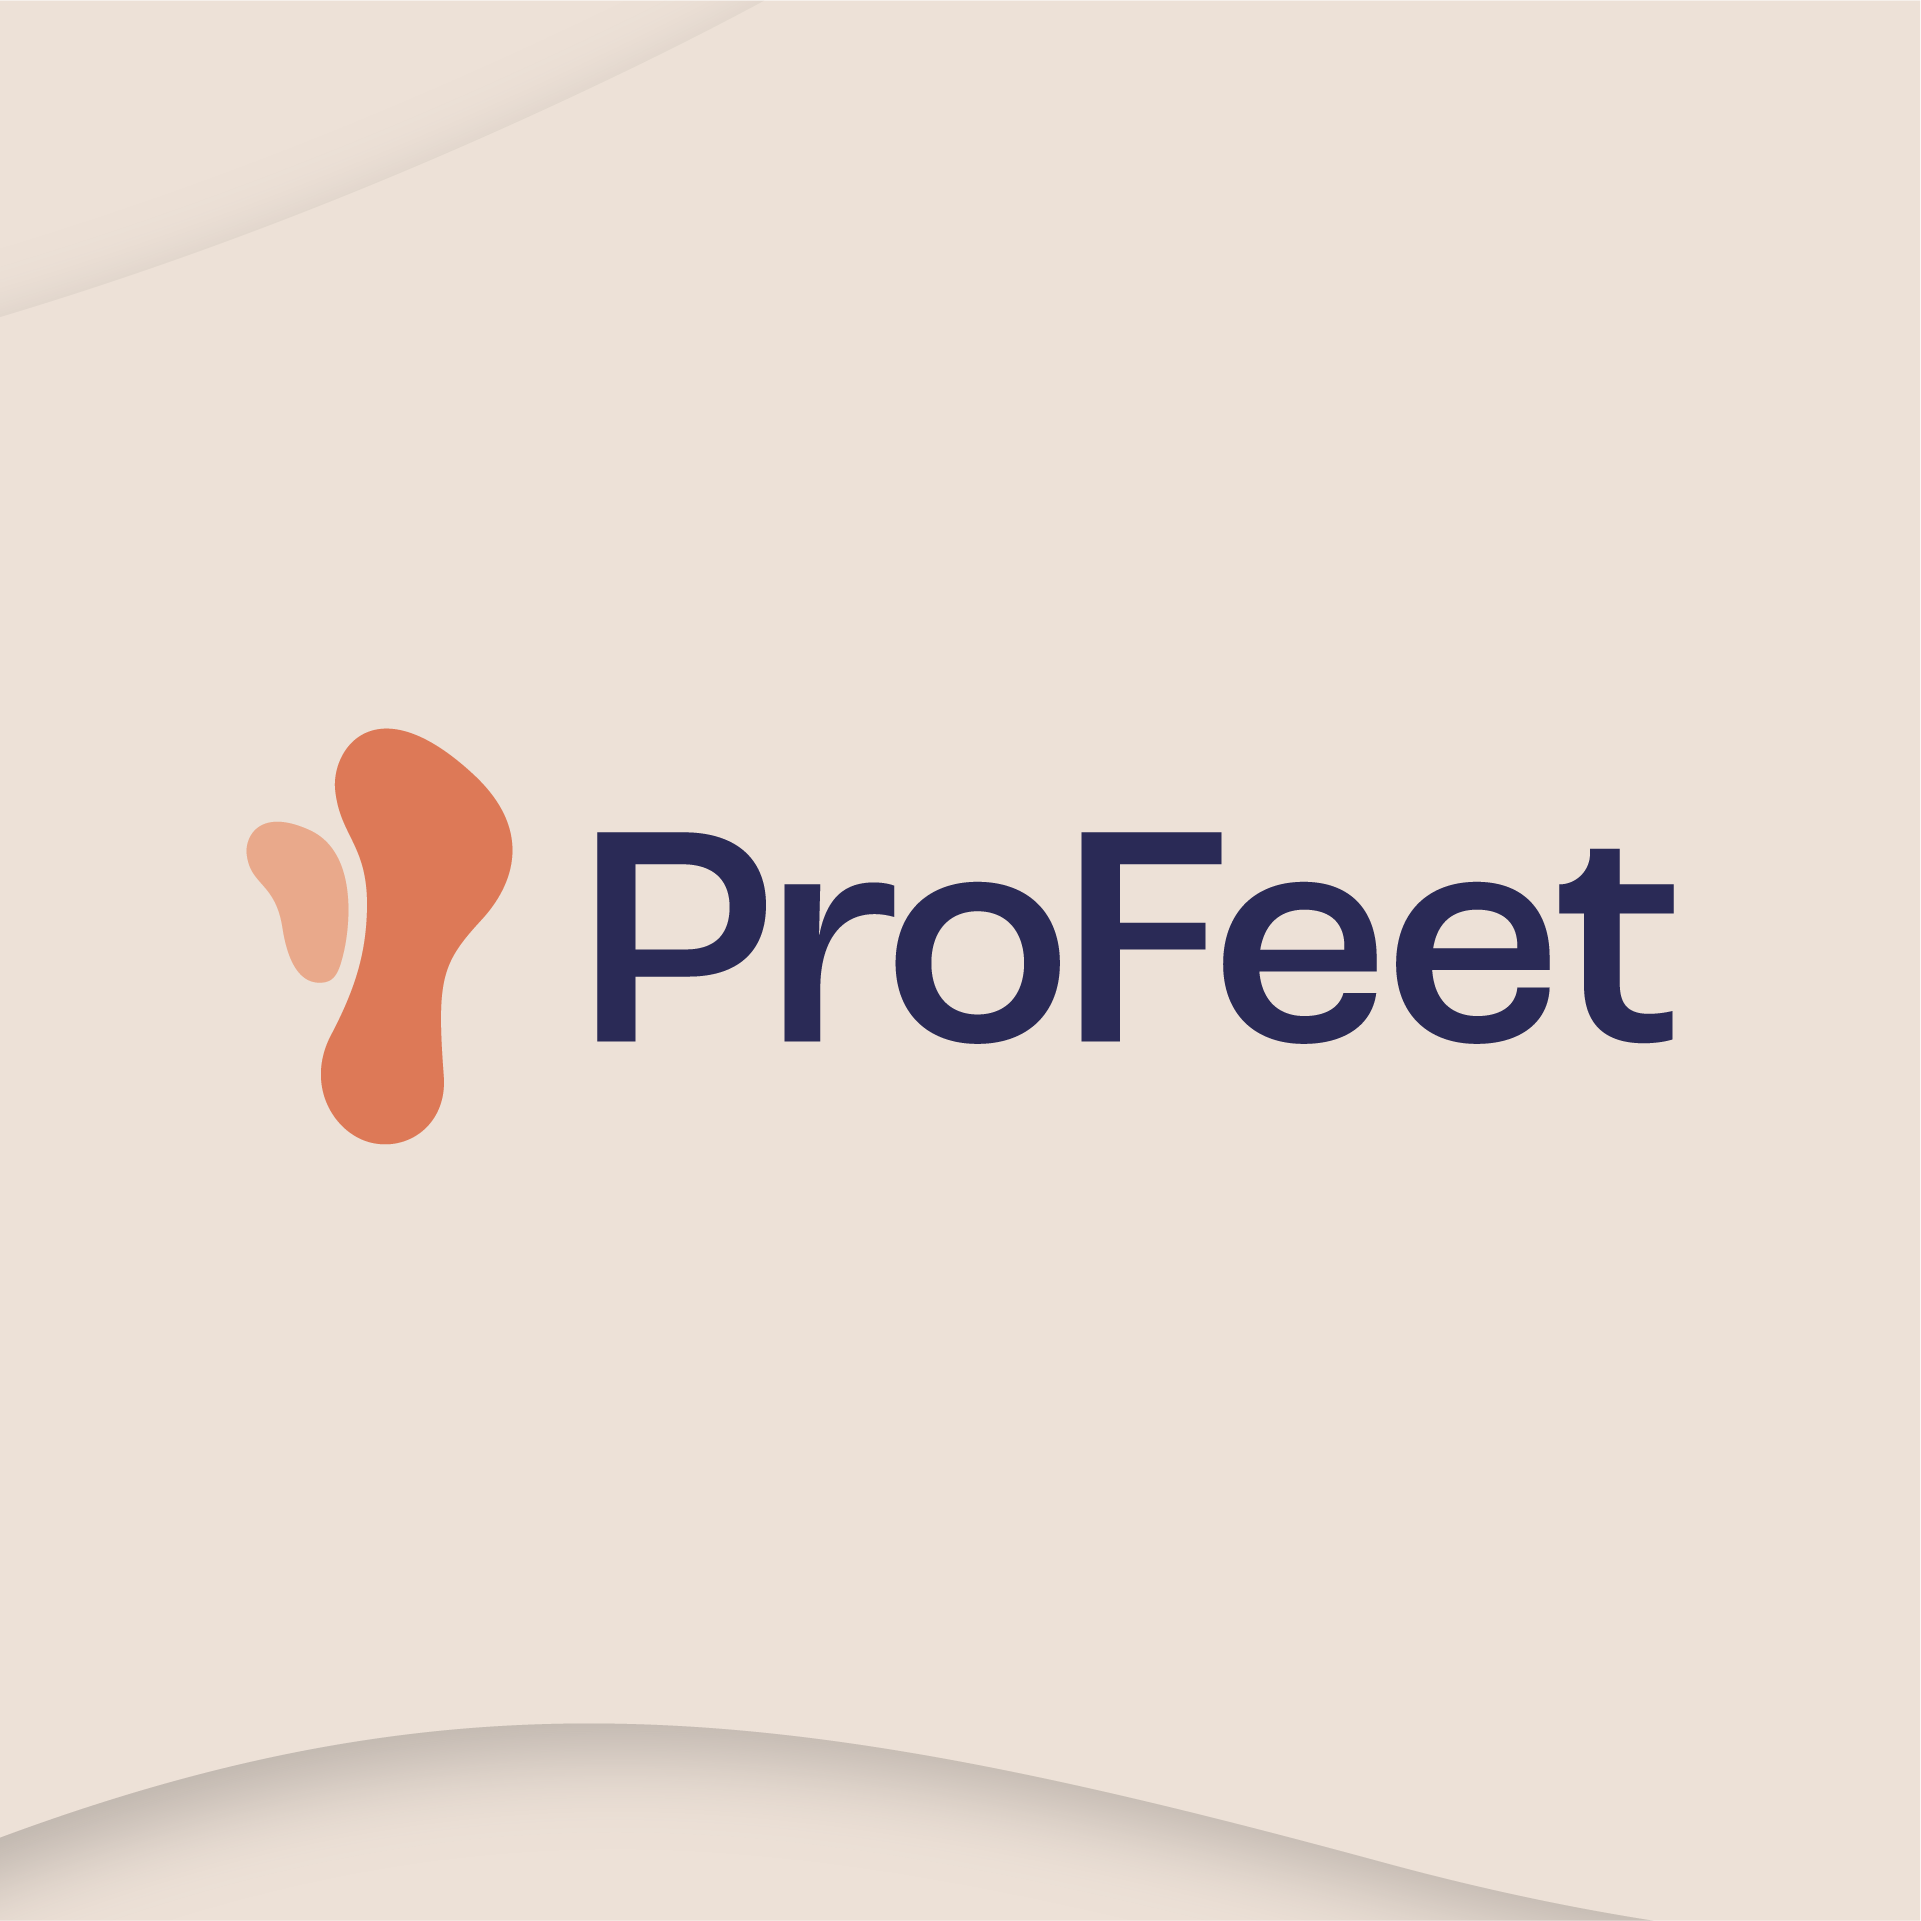 Close up of the ProFeet logo